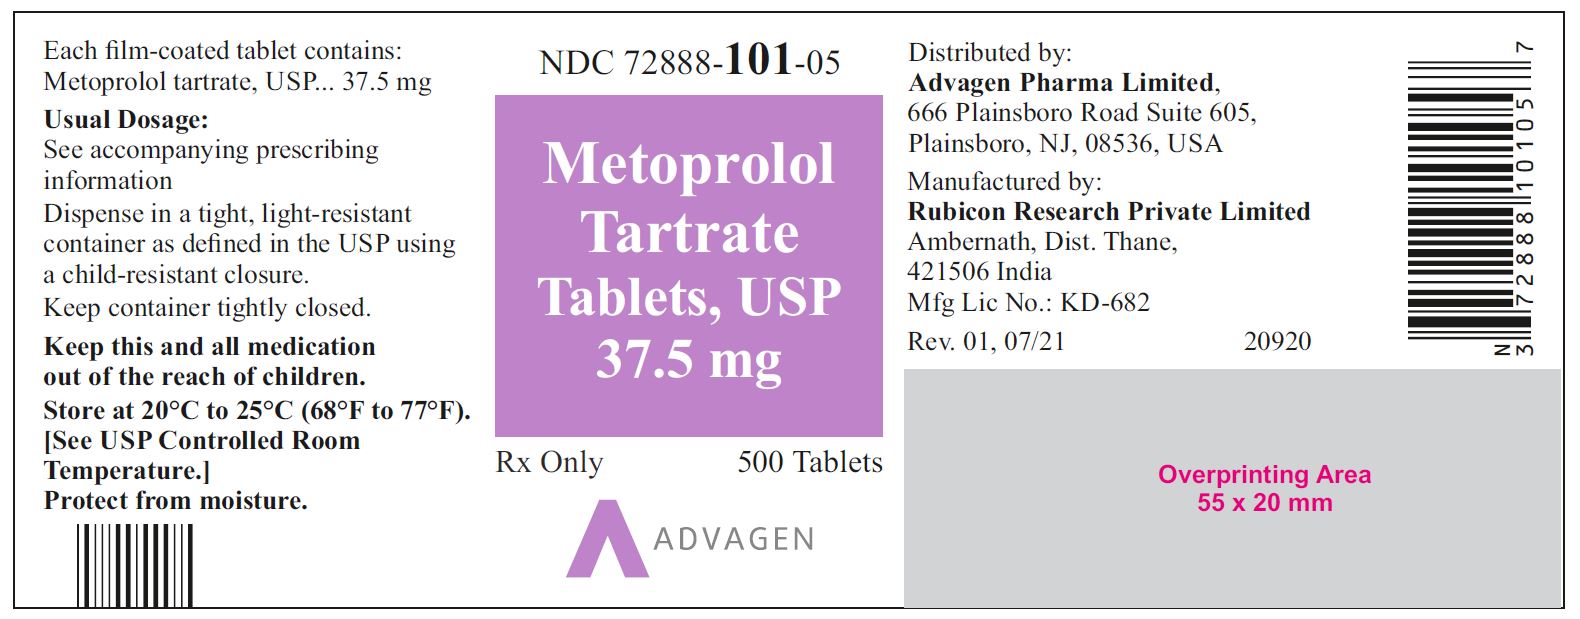 NDC: <a href=/NDC/72888-101-05>72888-101-05</a> - Metoprolol Tartrate Tablets, USP 37.5 mg - 500 Tablets